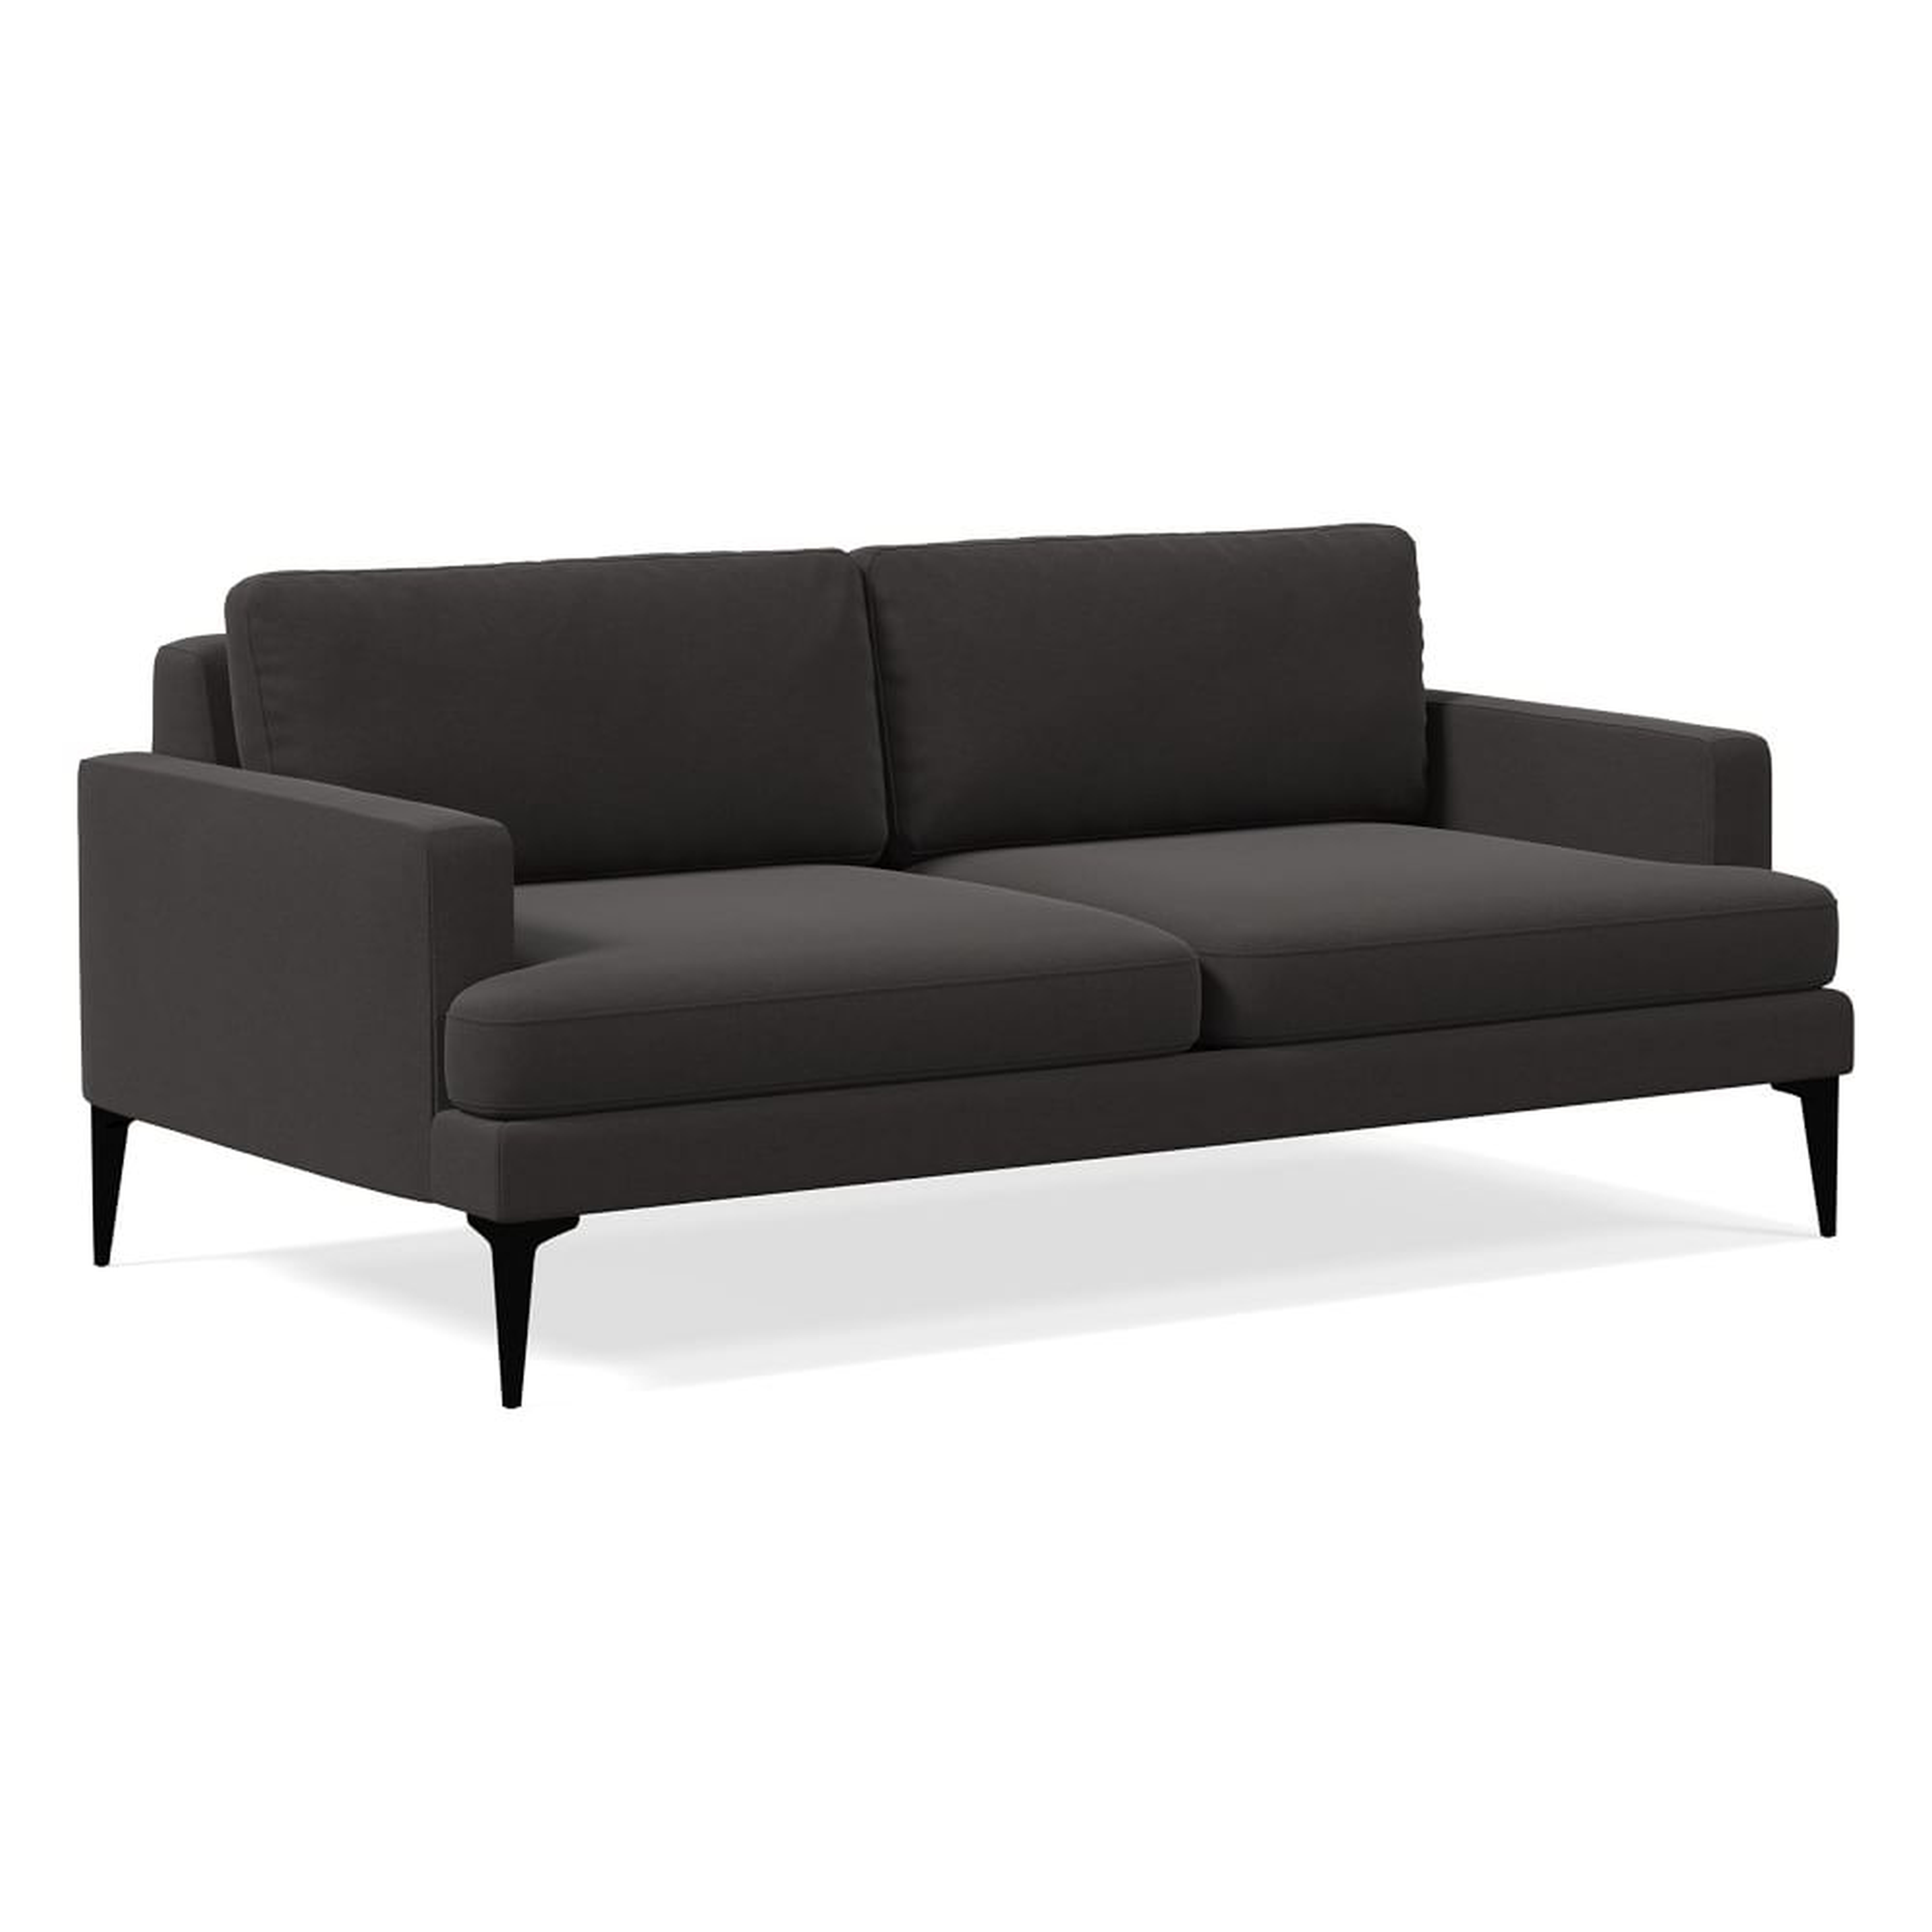 Andes 77" Multi-Seat Sofa, Standard Depth, Performance Velvet, Slate, Dark Pewter - West Elm